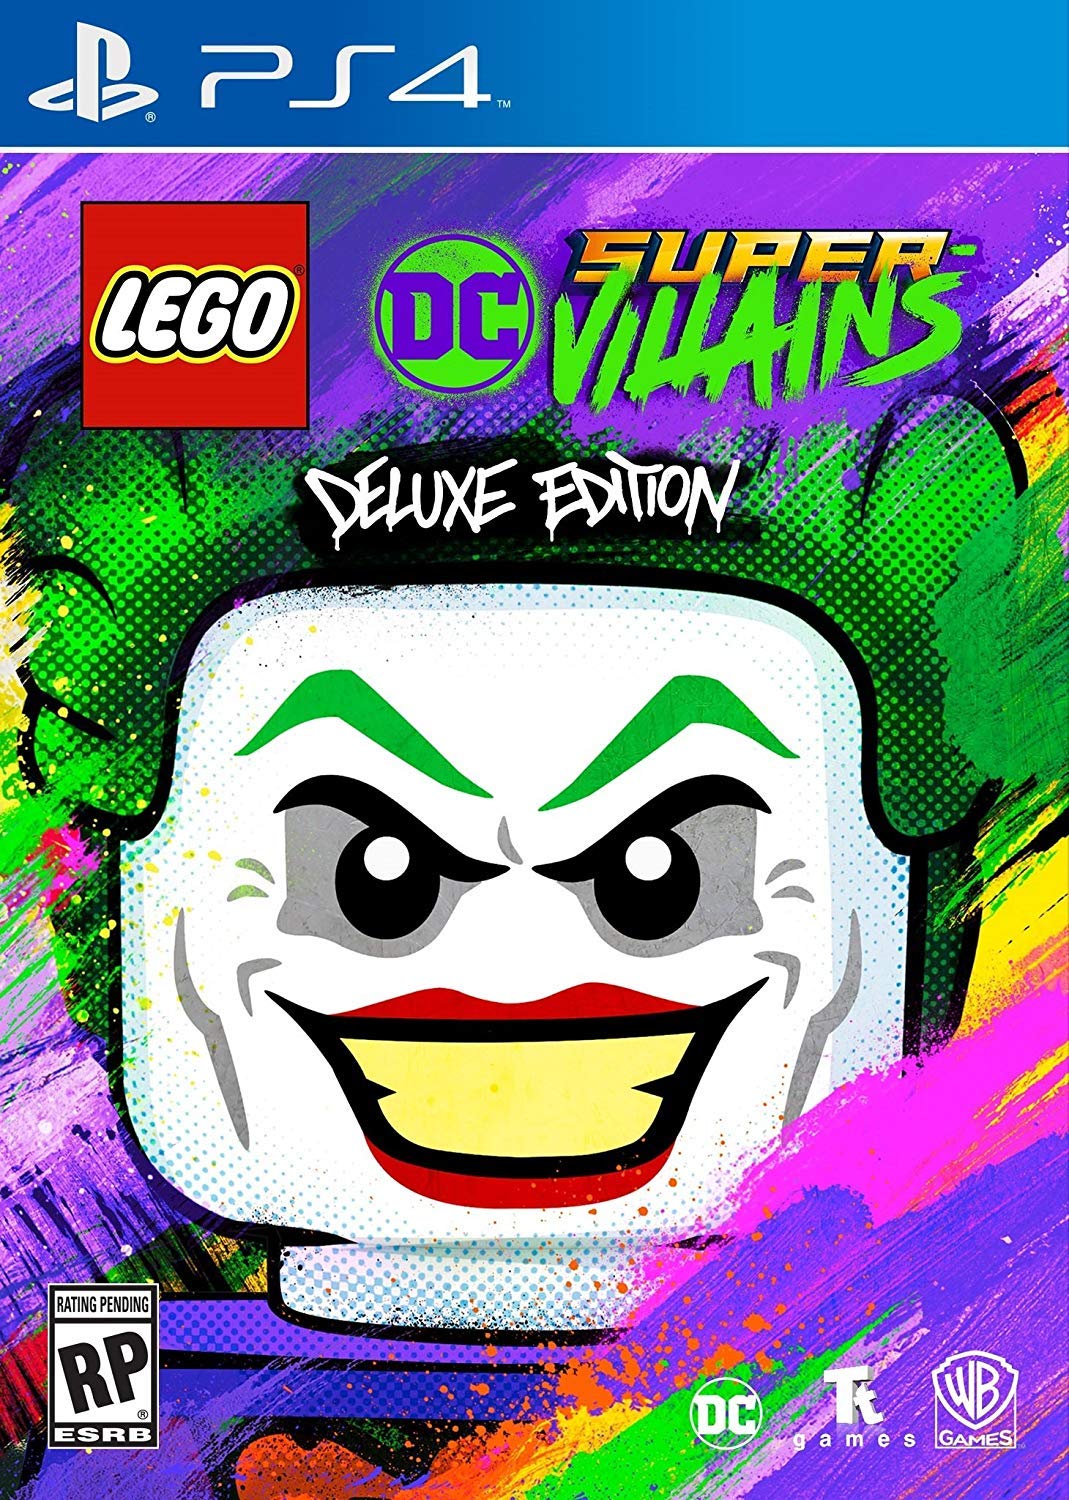 Lego DC Super Villains Deluxe Edition